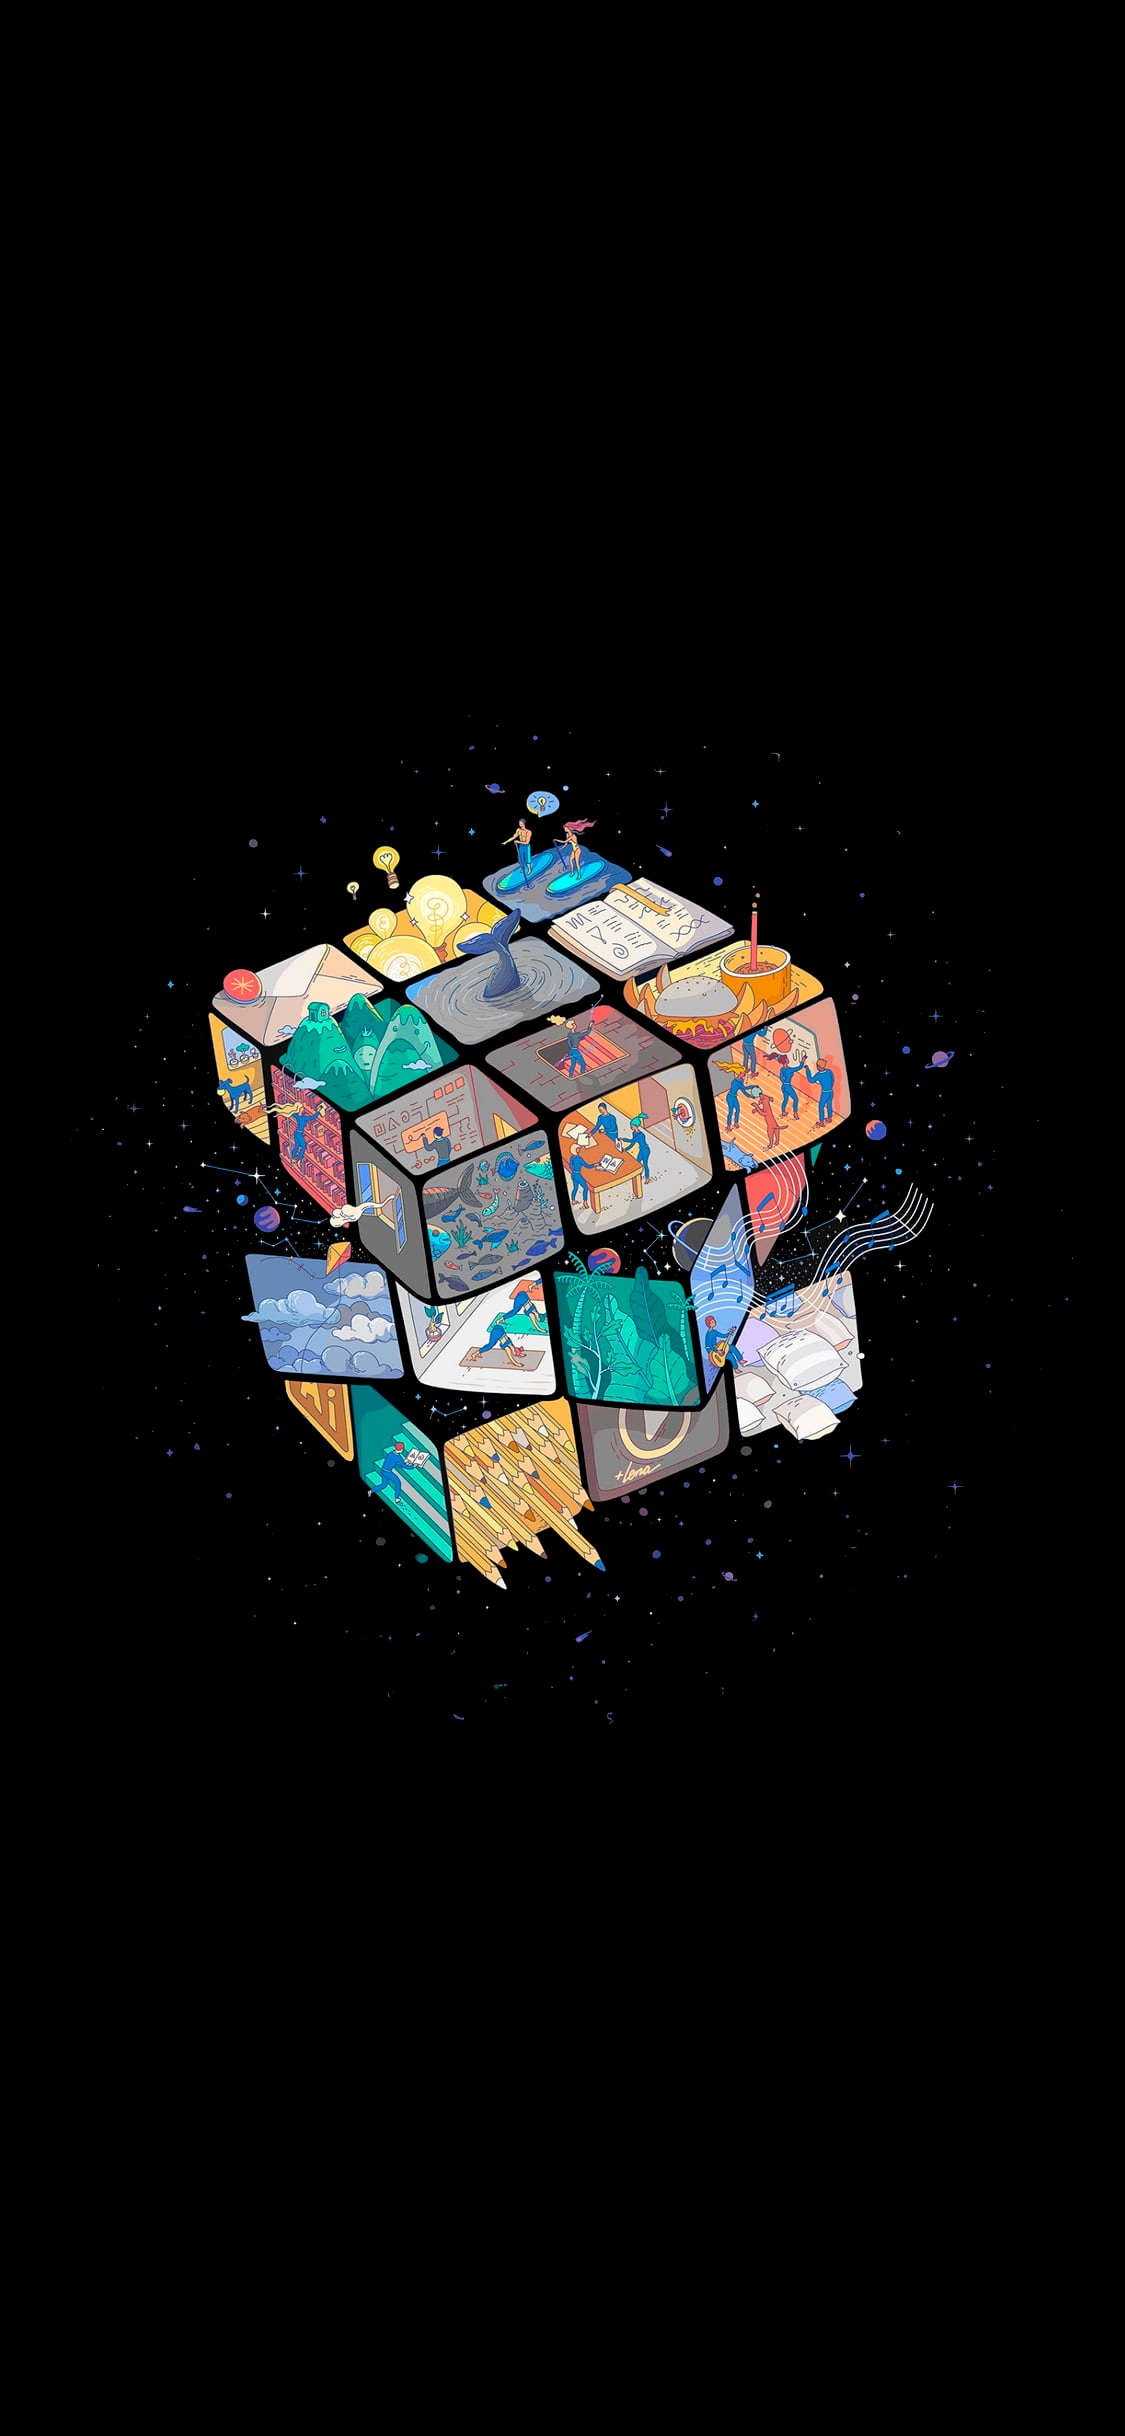 Amoled, dark, Rubik’s Cube wallpaper